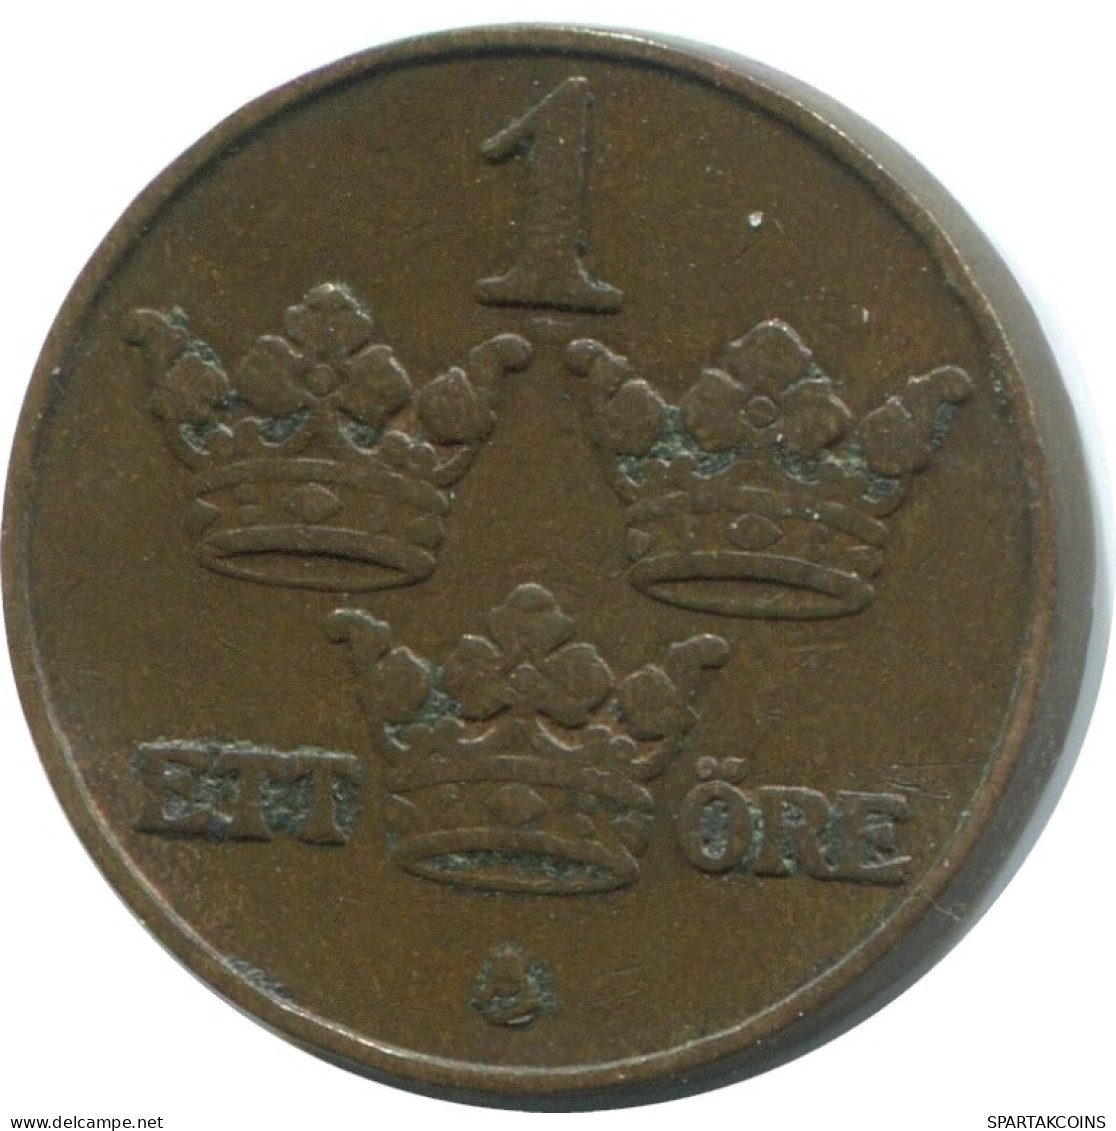 1 ORE 1909 SWEDEN Coin #AD399.2.U.A - Sweden